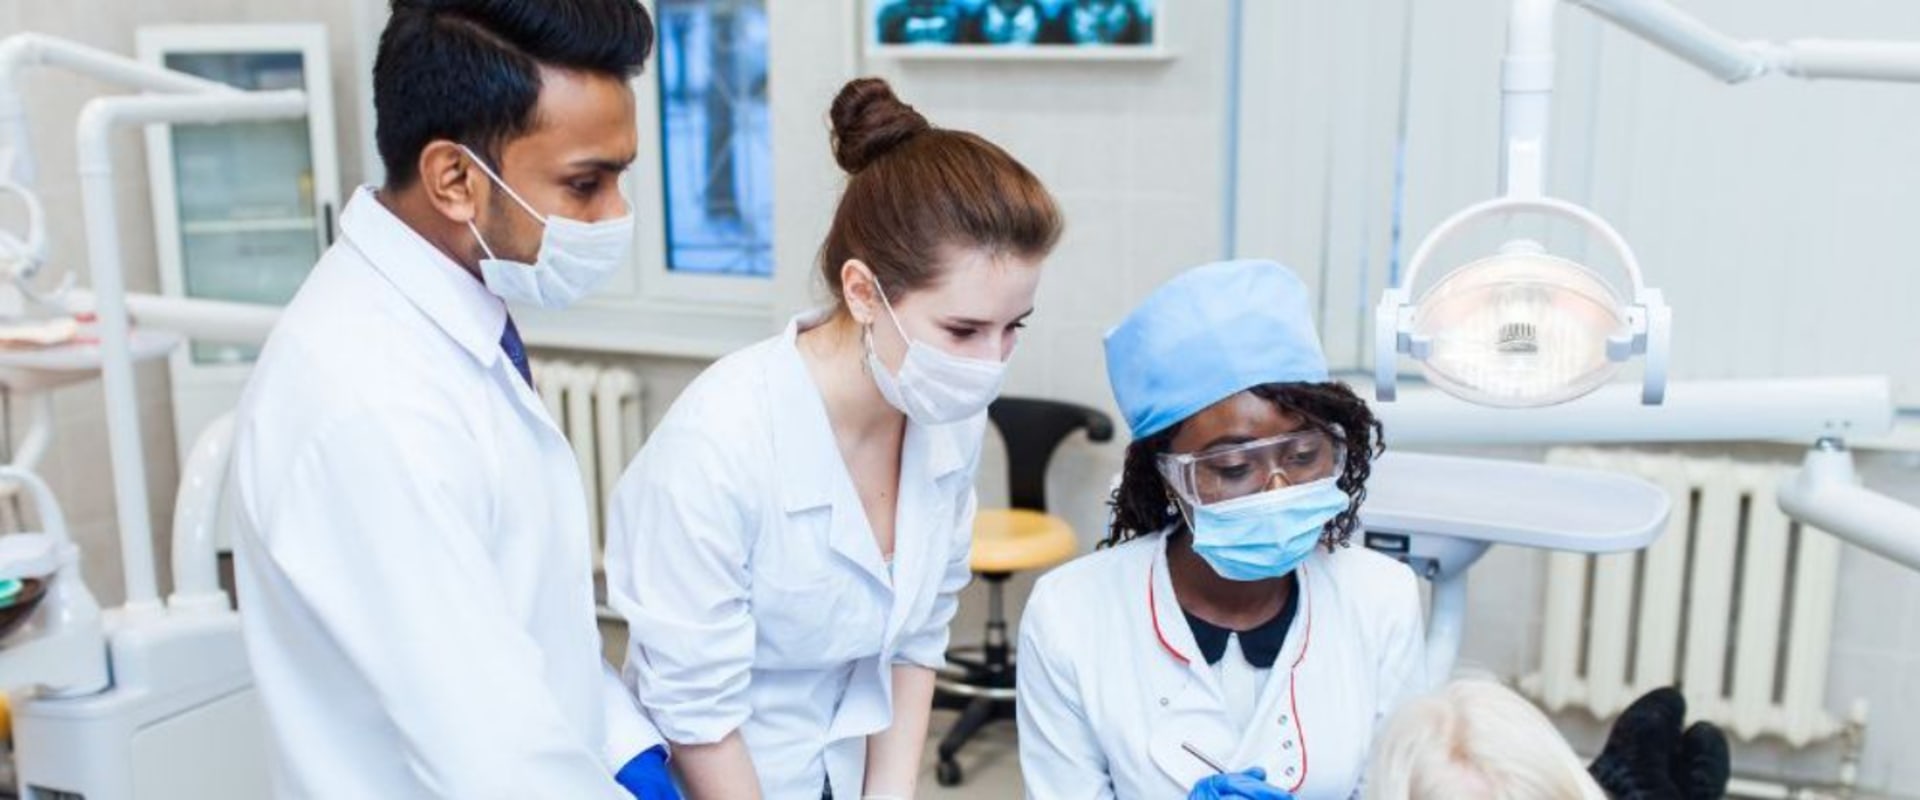 What skills do you learn in dental school?